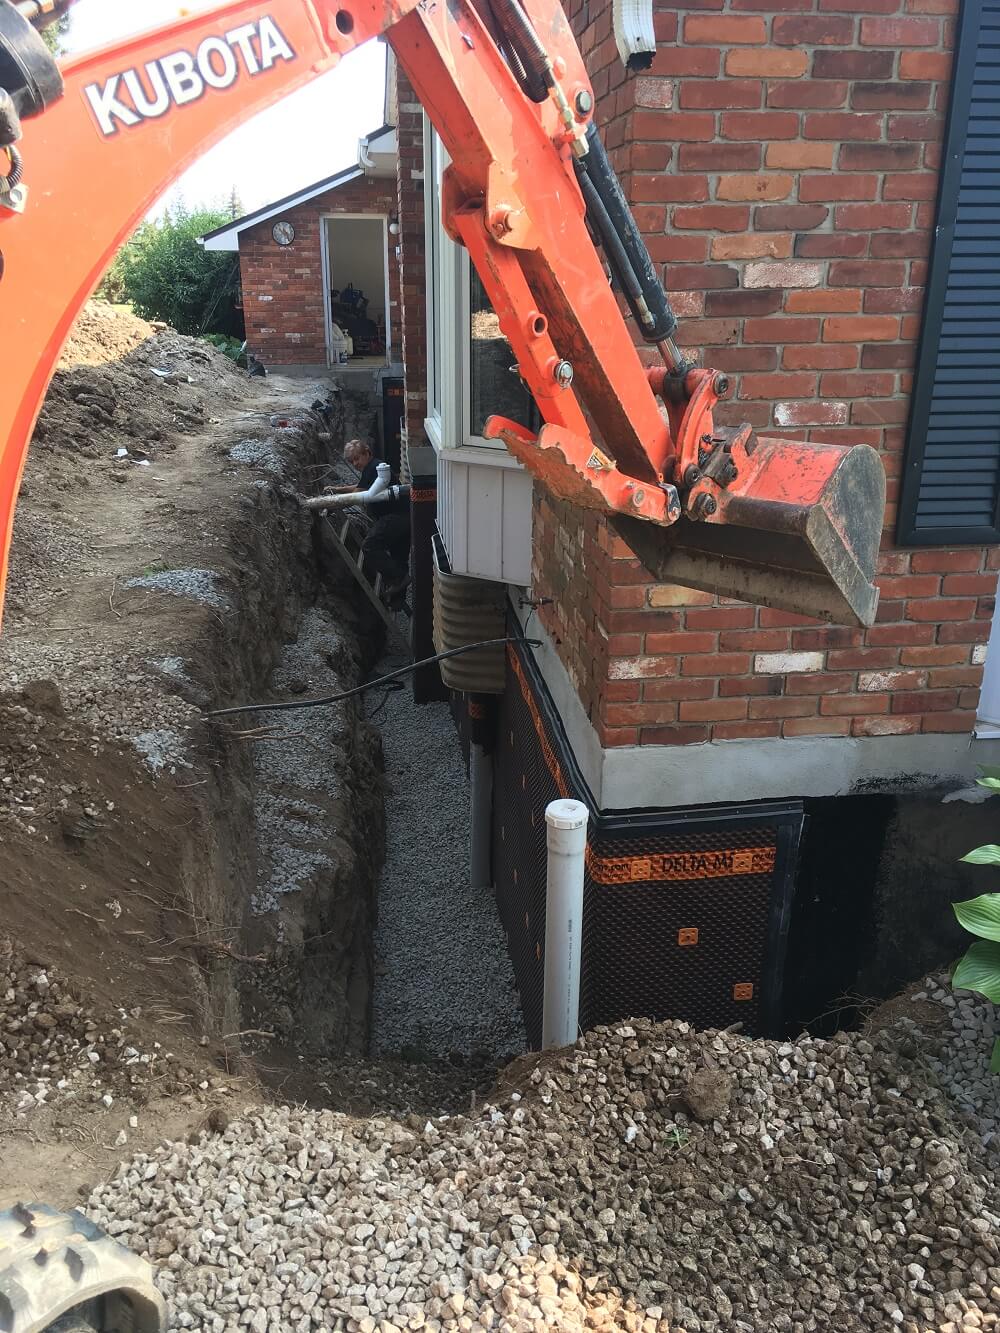 diggingl around foundation